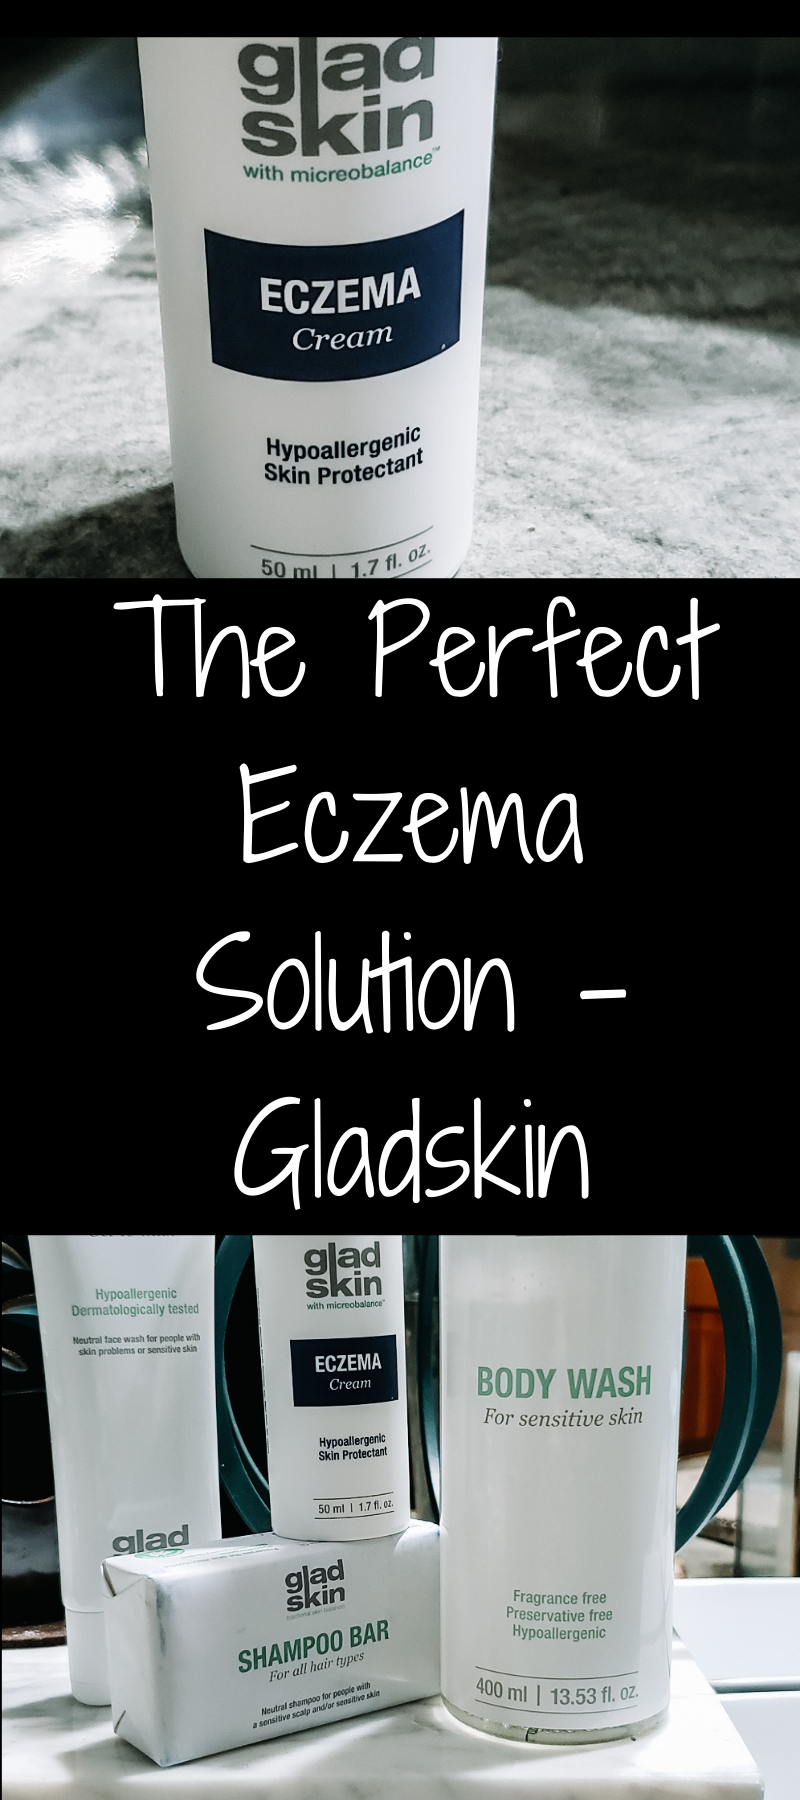 Eczema Solution bottle from gladskin